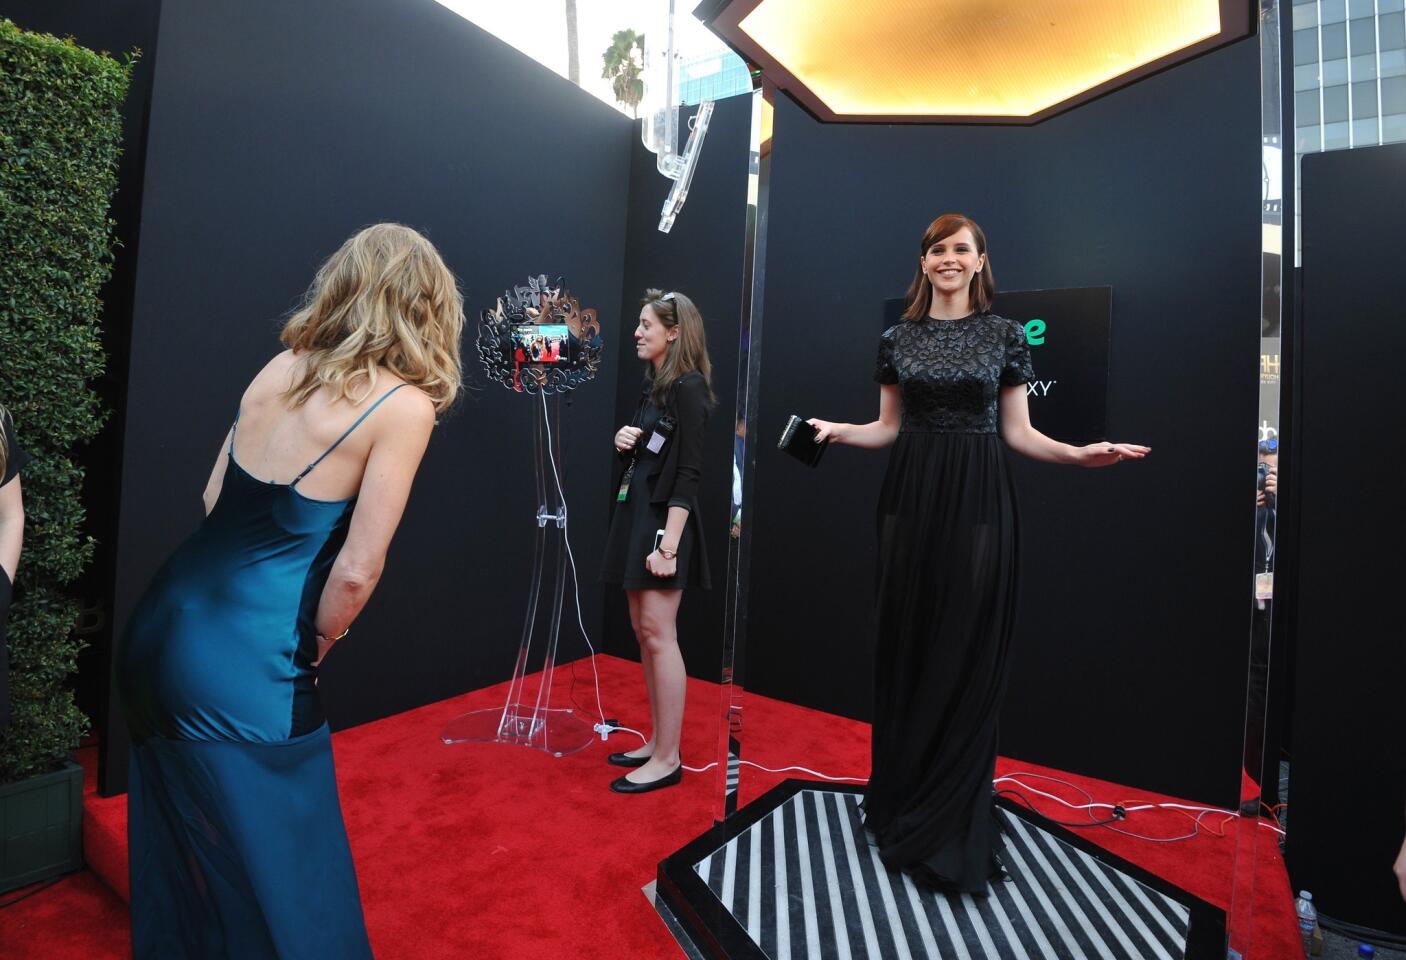 Hollywood Film Awards 2014 | Red carpet